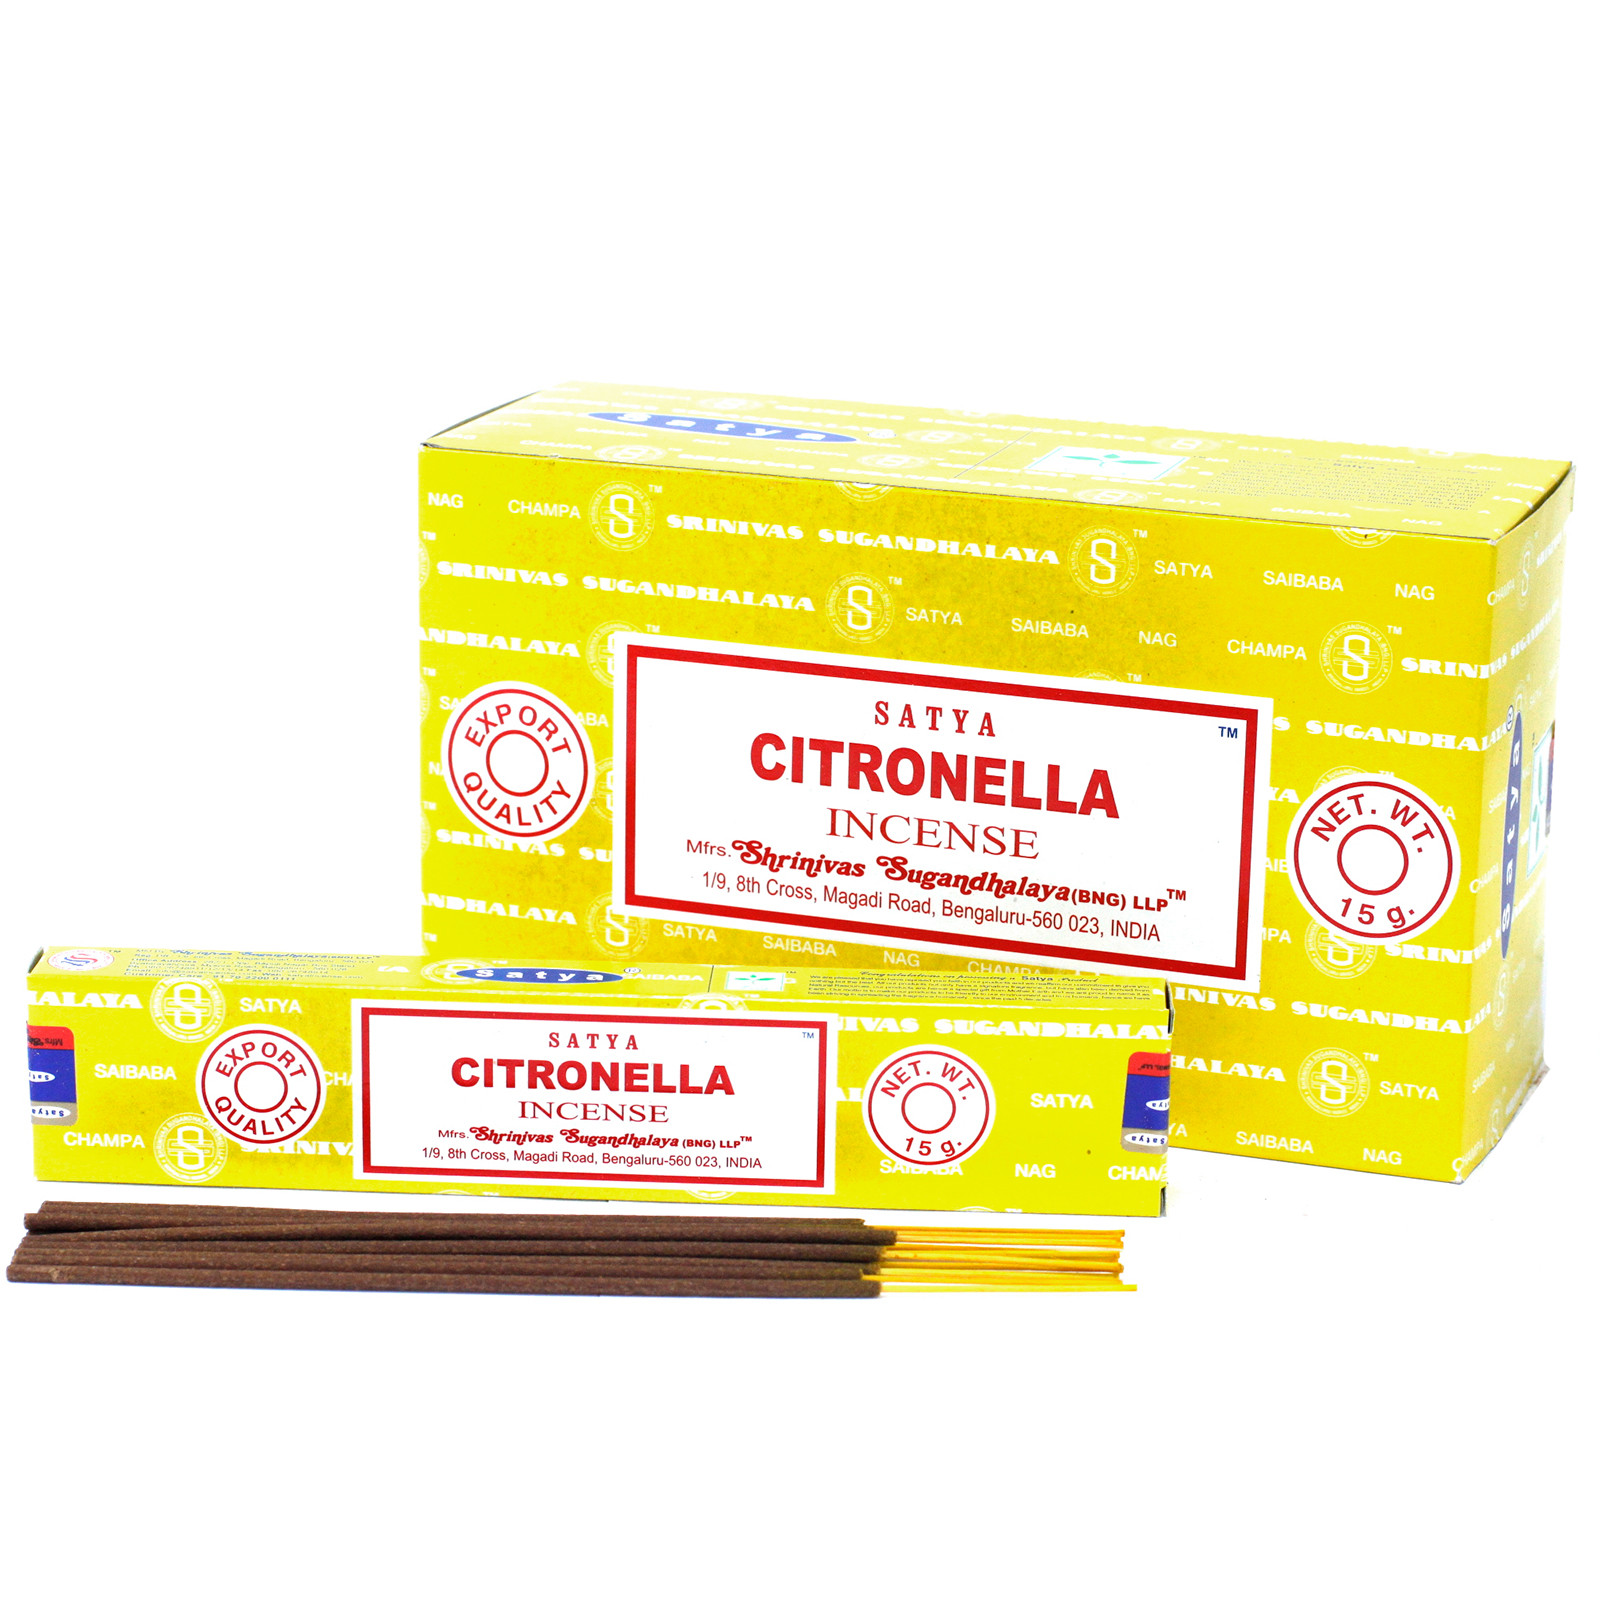 3 x 15g Packs Satya Incense Sticks - Citronella